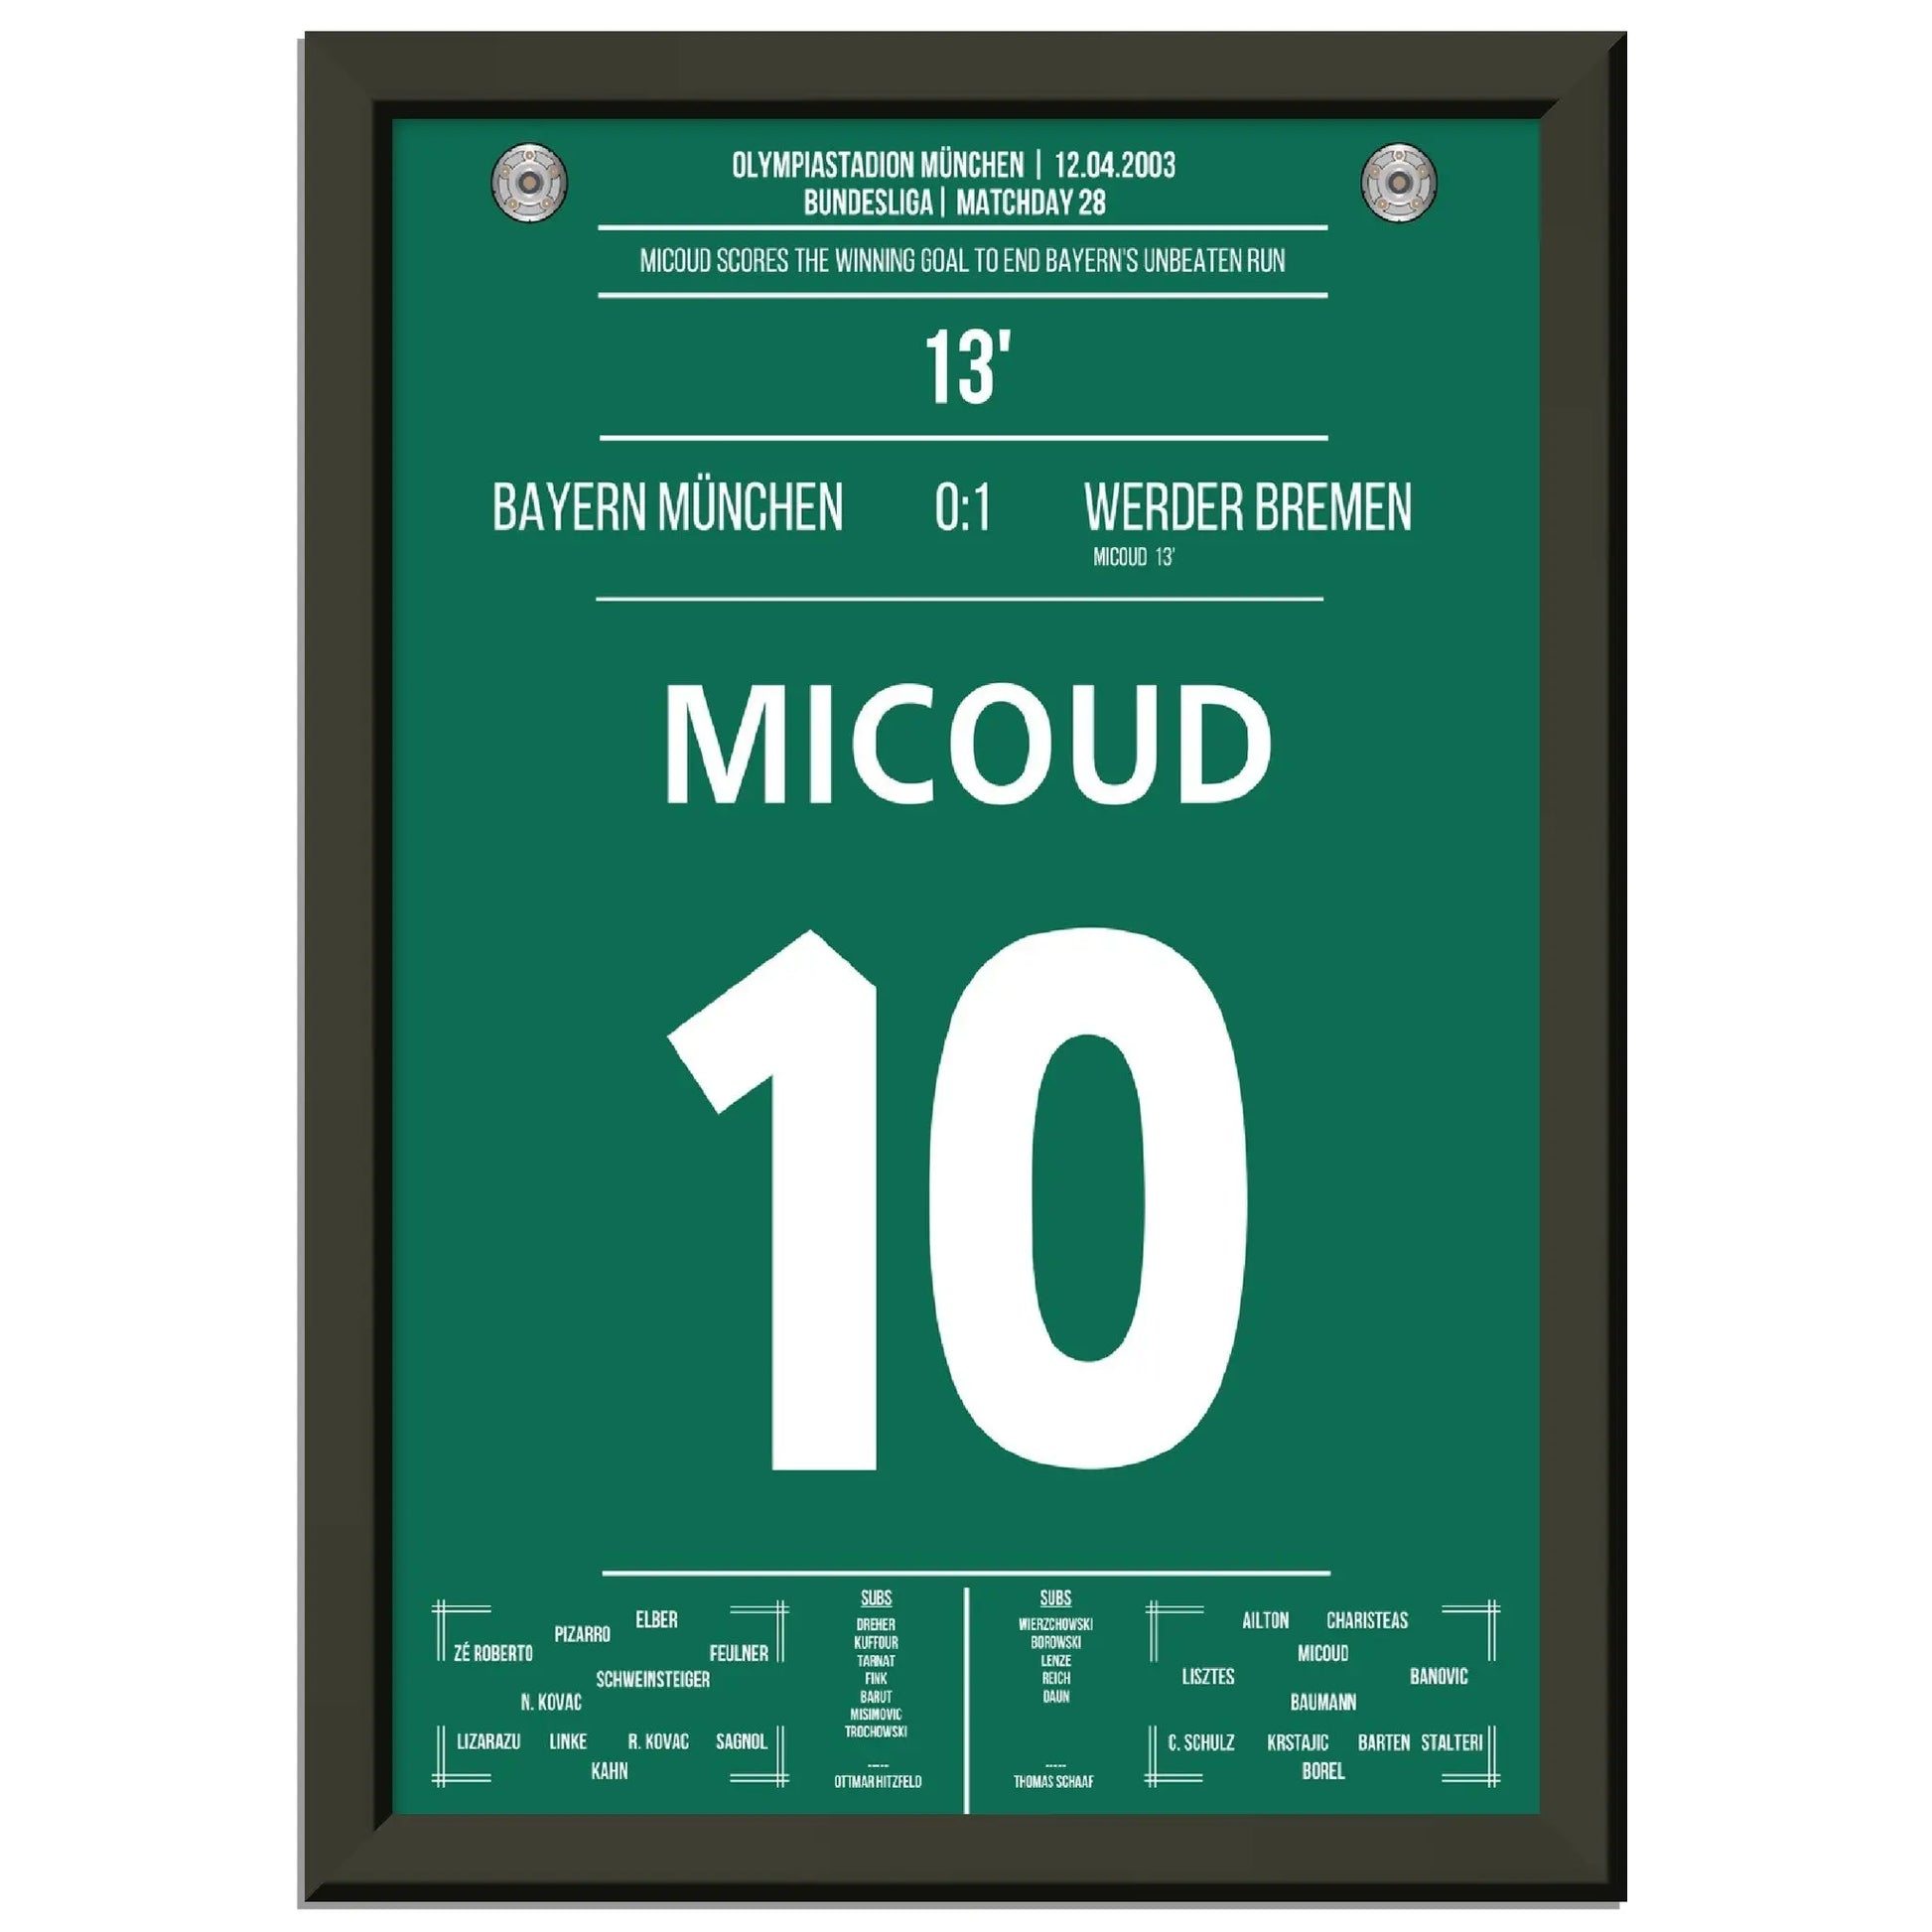 Micoud's Siegtreffer bei den Bayern 2003 